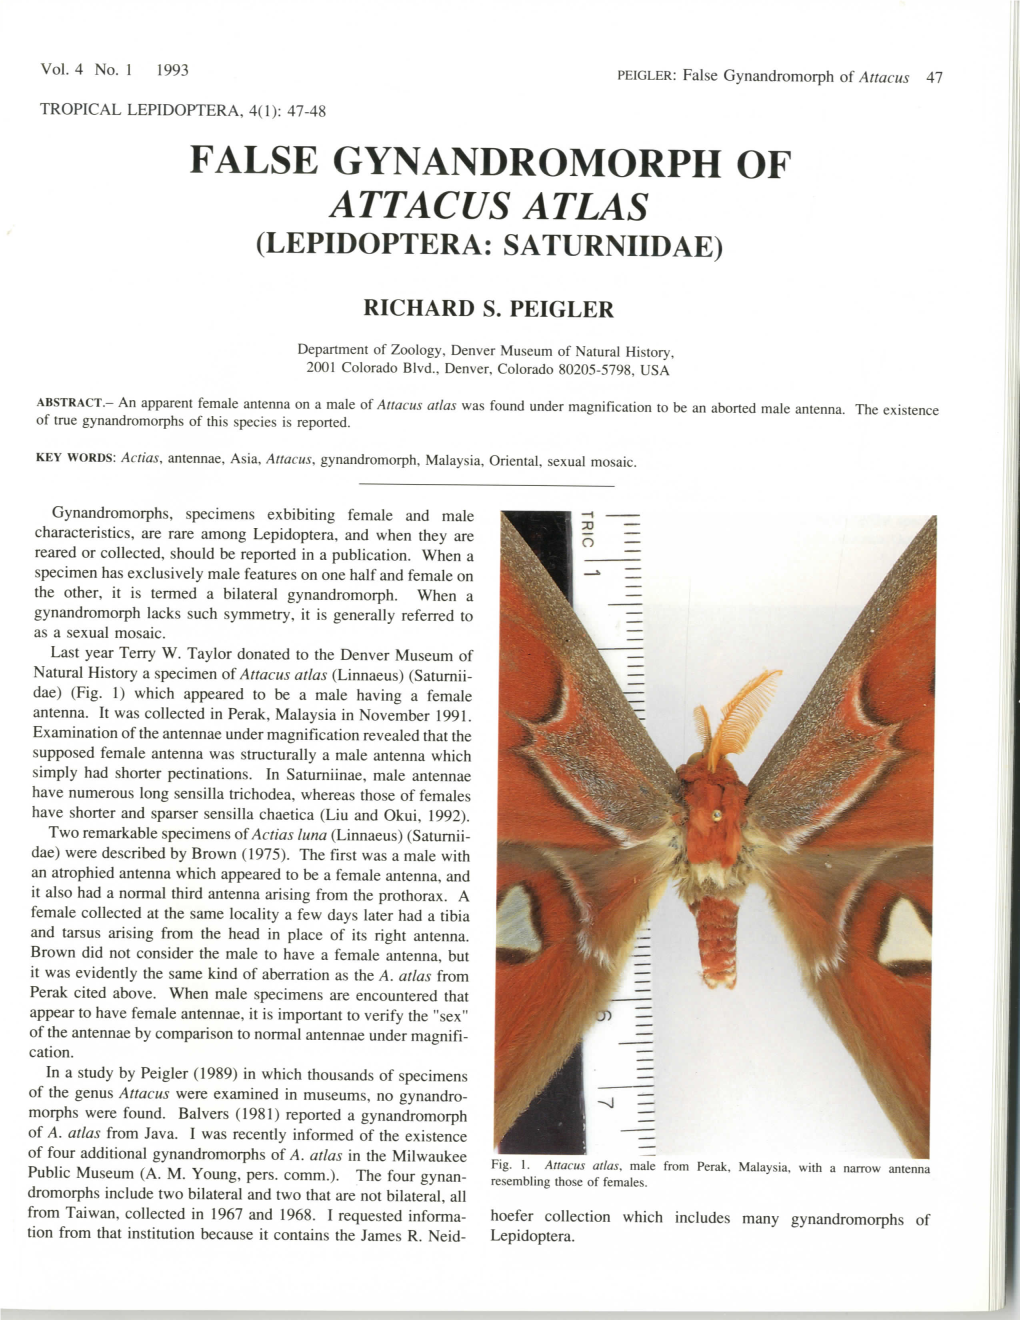 False Gynandromorph of Attacus Atlas (Lepidoptera: Saturniidae)